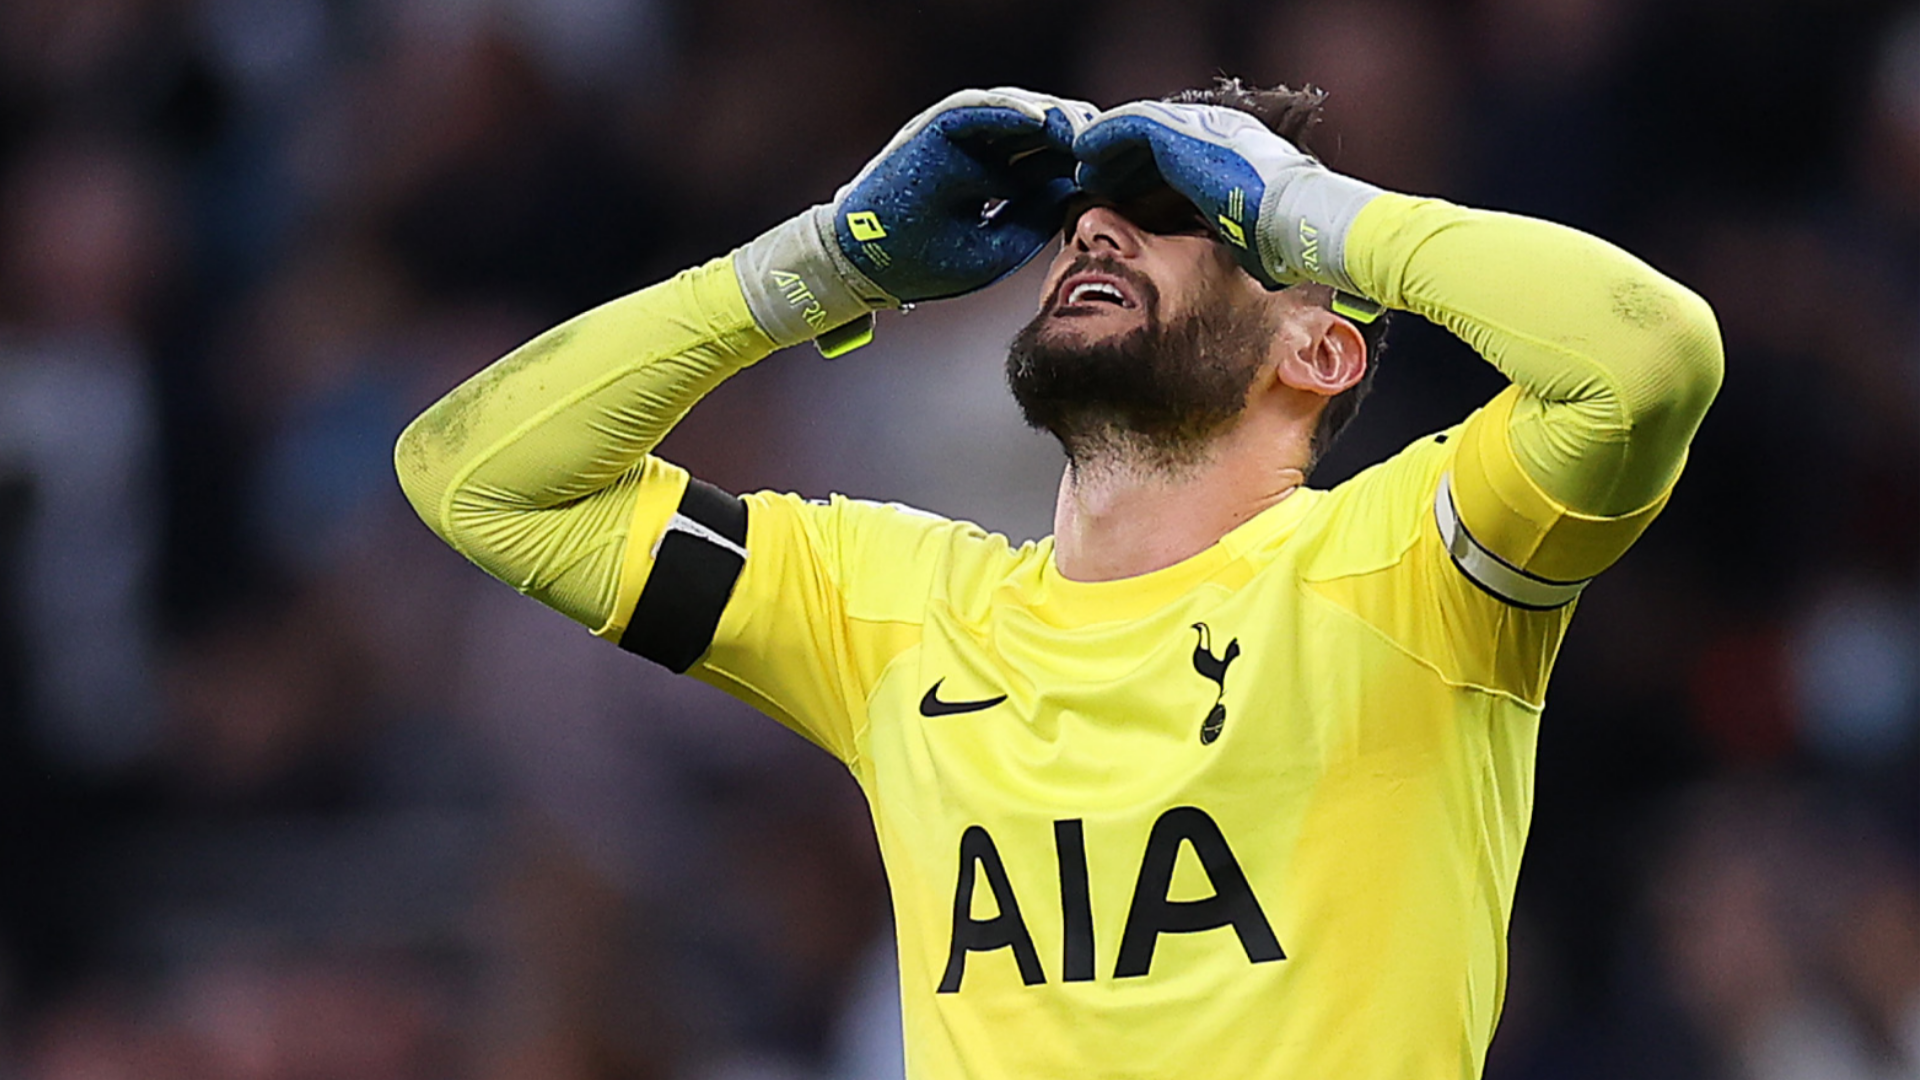 'It's the end of an era' - Hugo Lloris confirms he wants to leave Tottenham